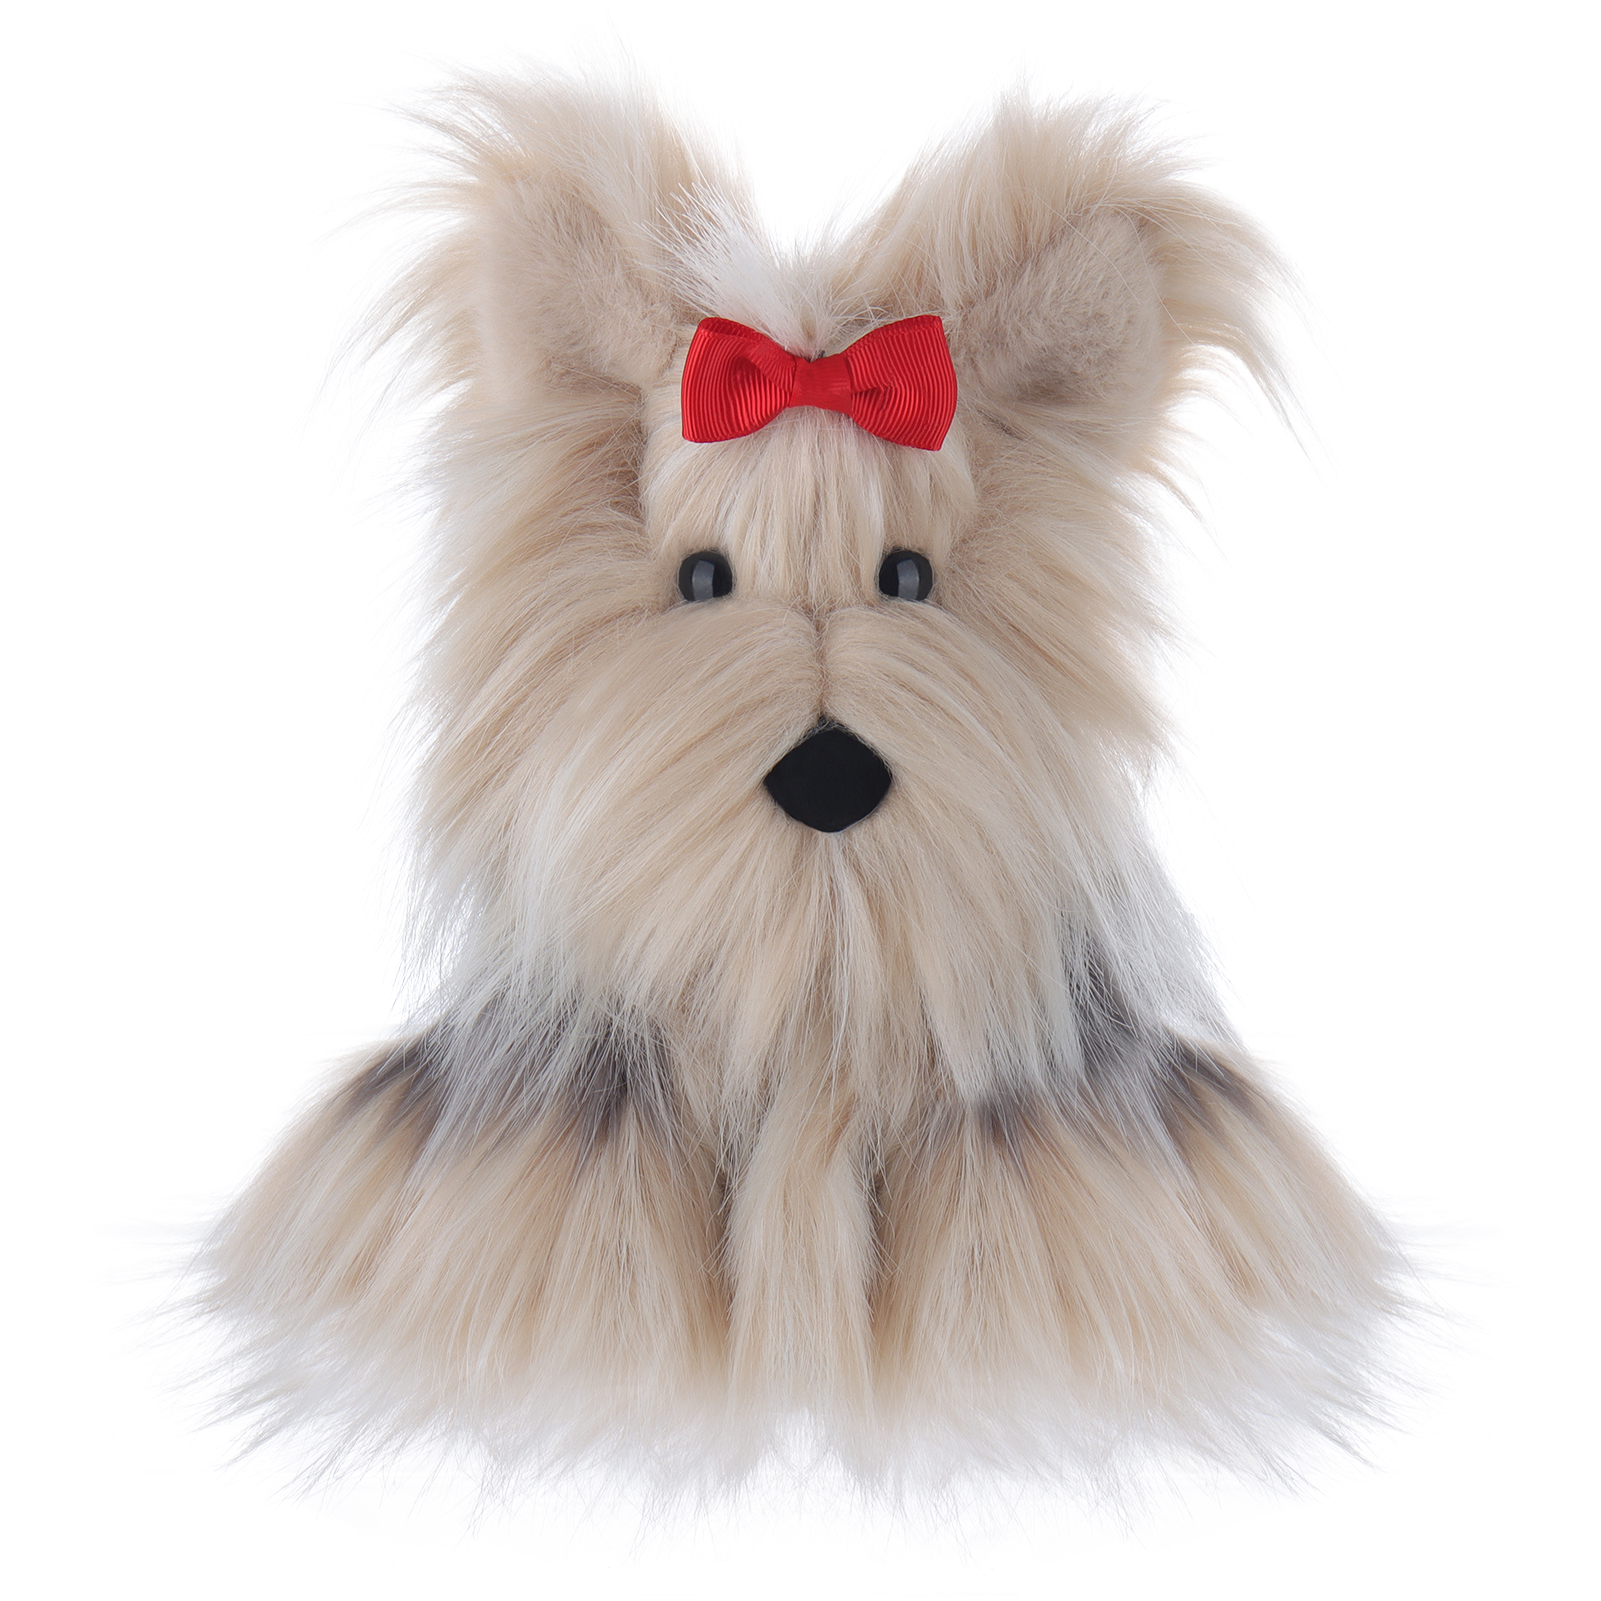 Apricot Lamb stylish yorkshire terrier Stuffed Animal Soft Plush Toys